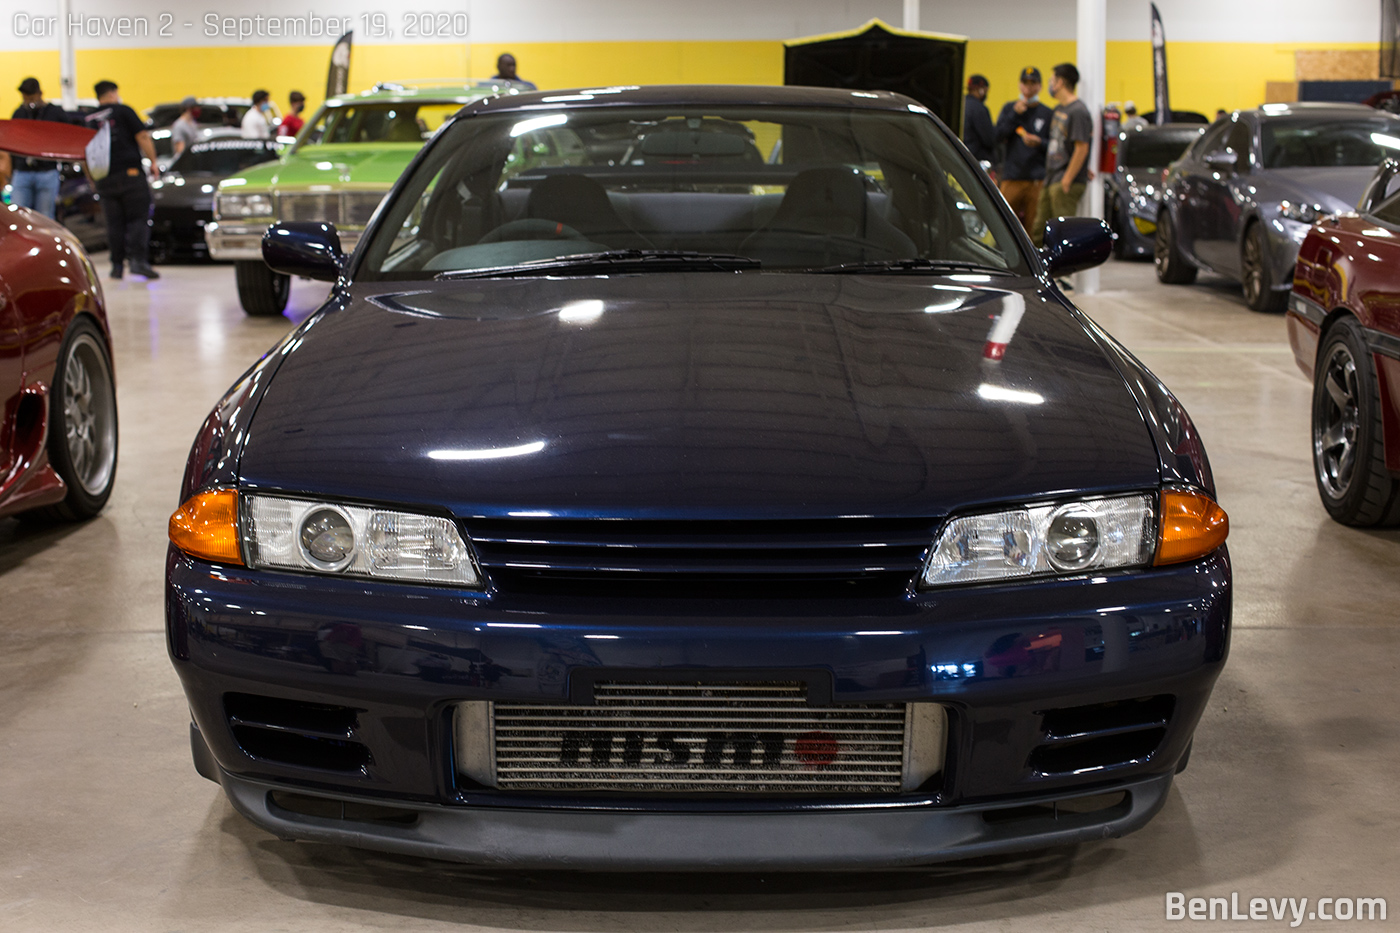 Blue R32 Nissan Skyline GT-R